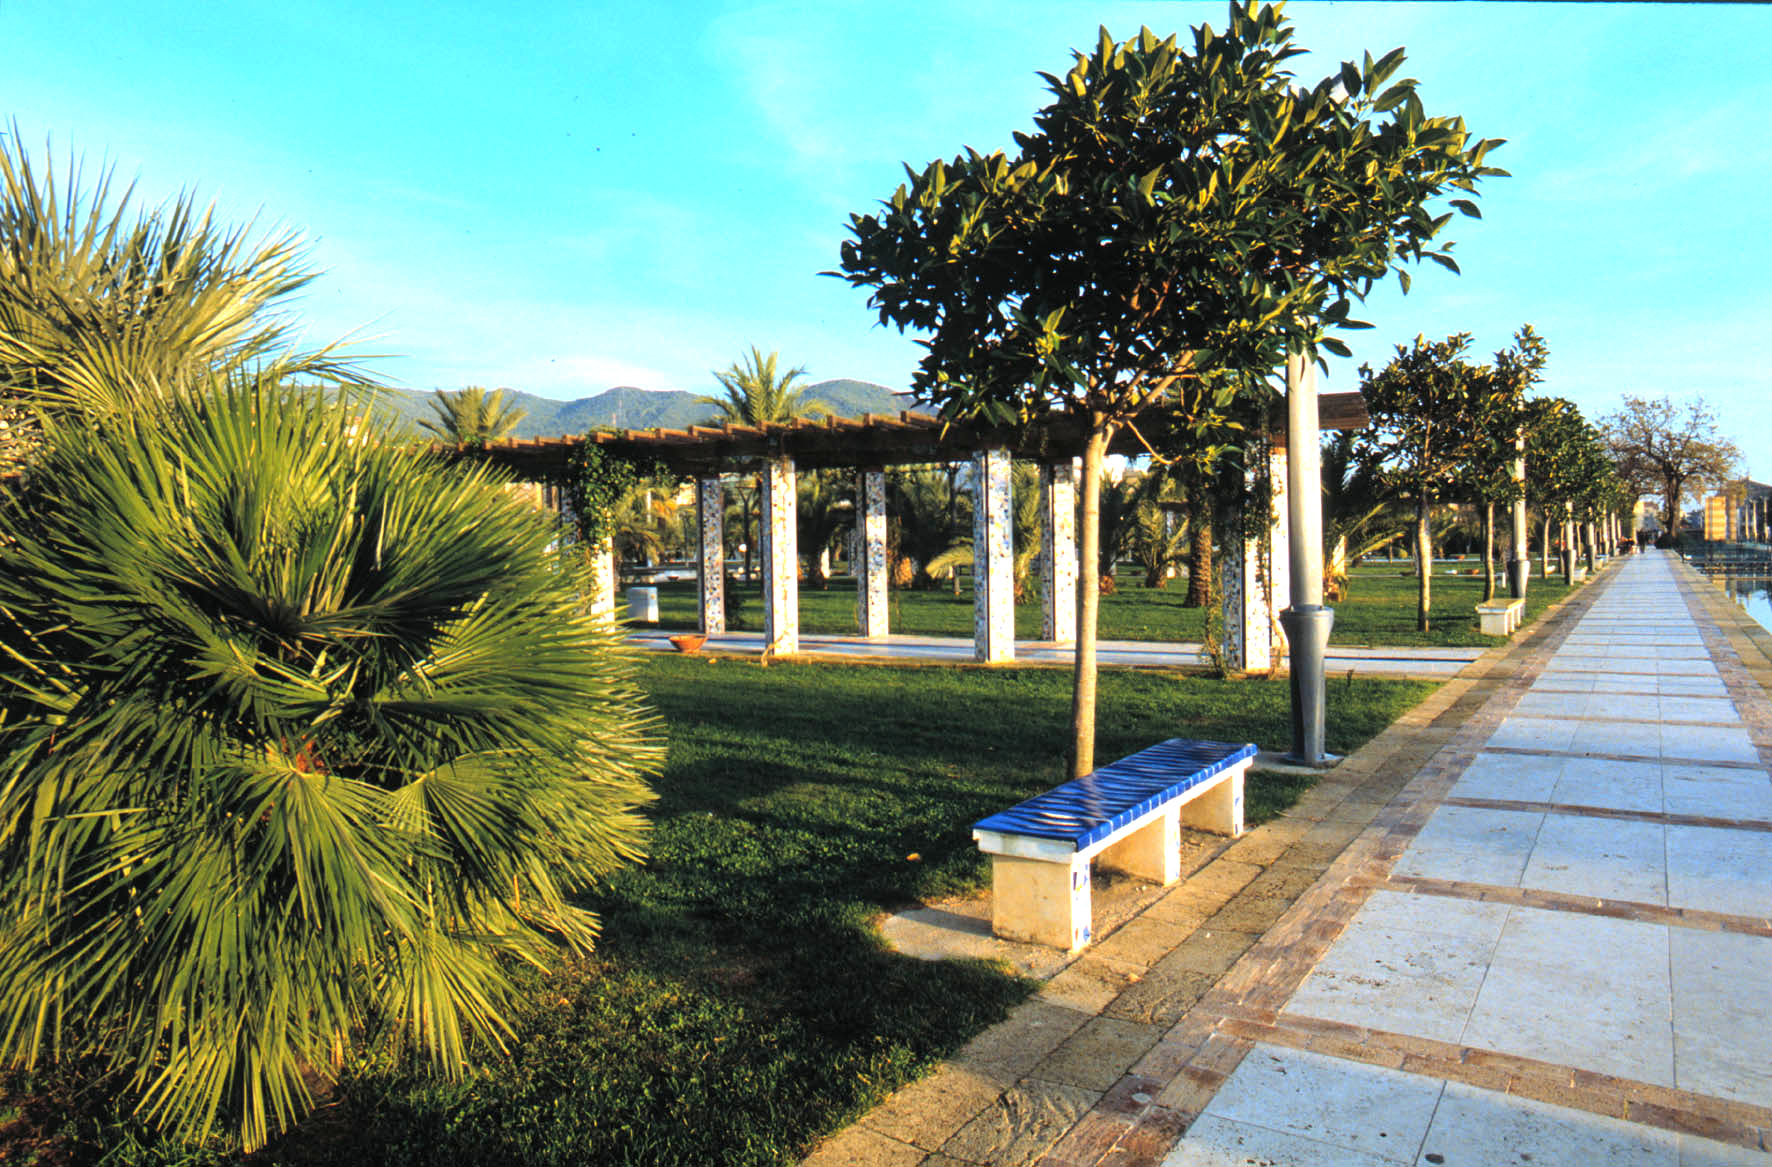 
  
    
      
      
          
Area del giardino mediterraneo, Parco Mercatello

    
  
          
